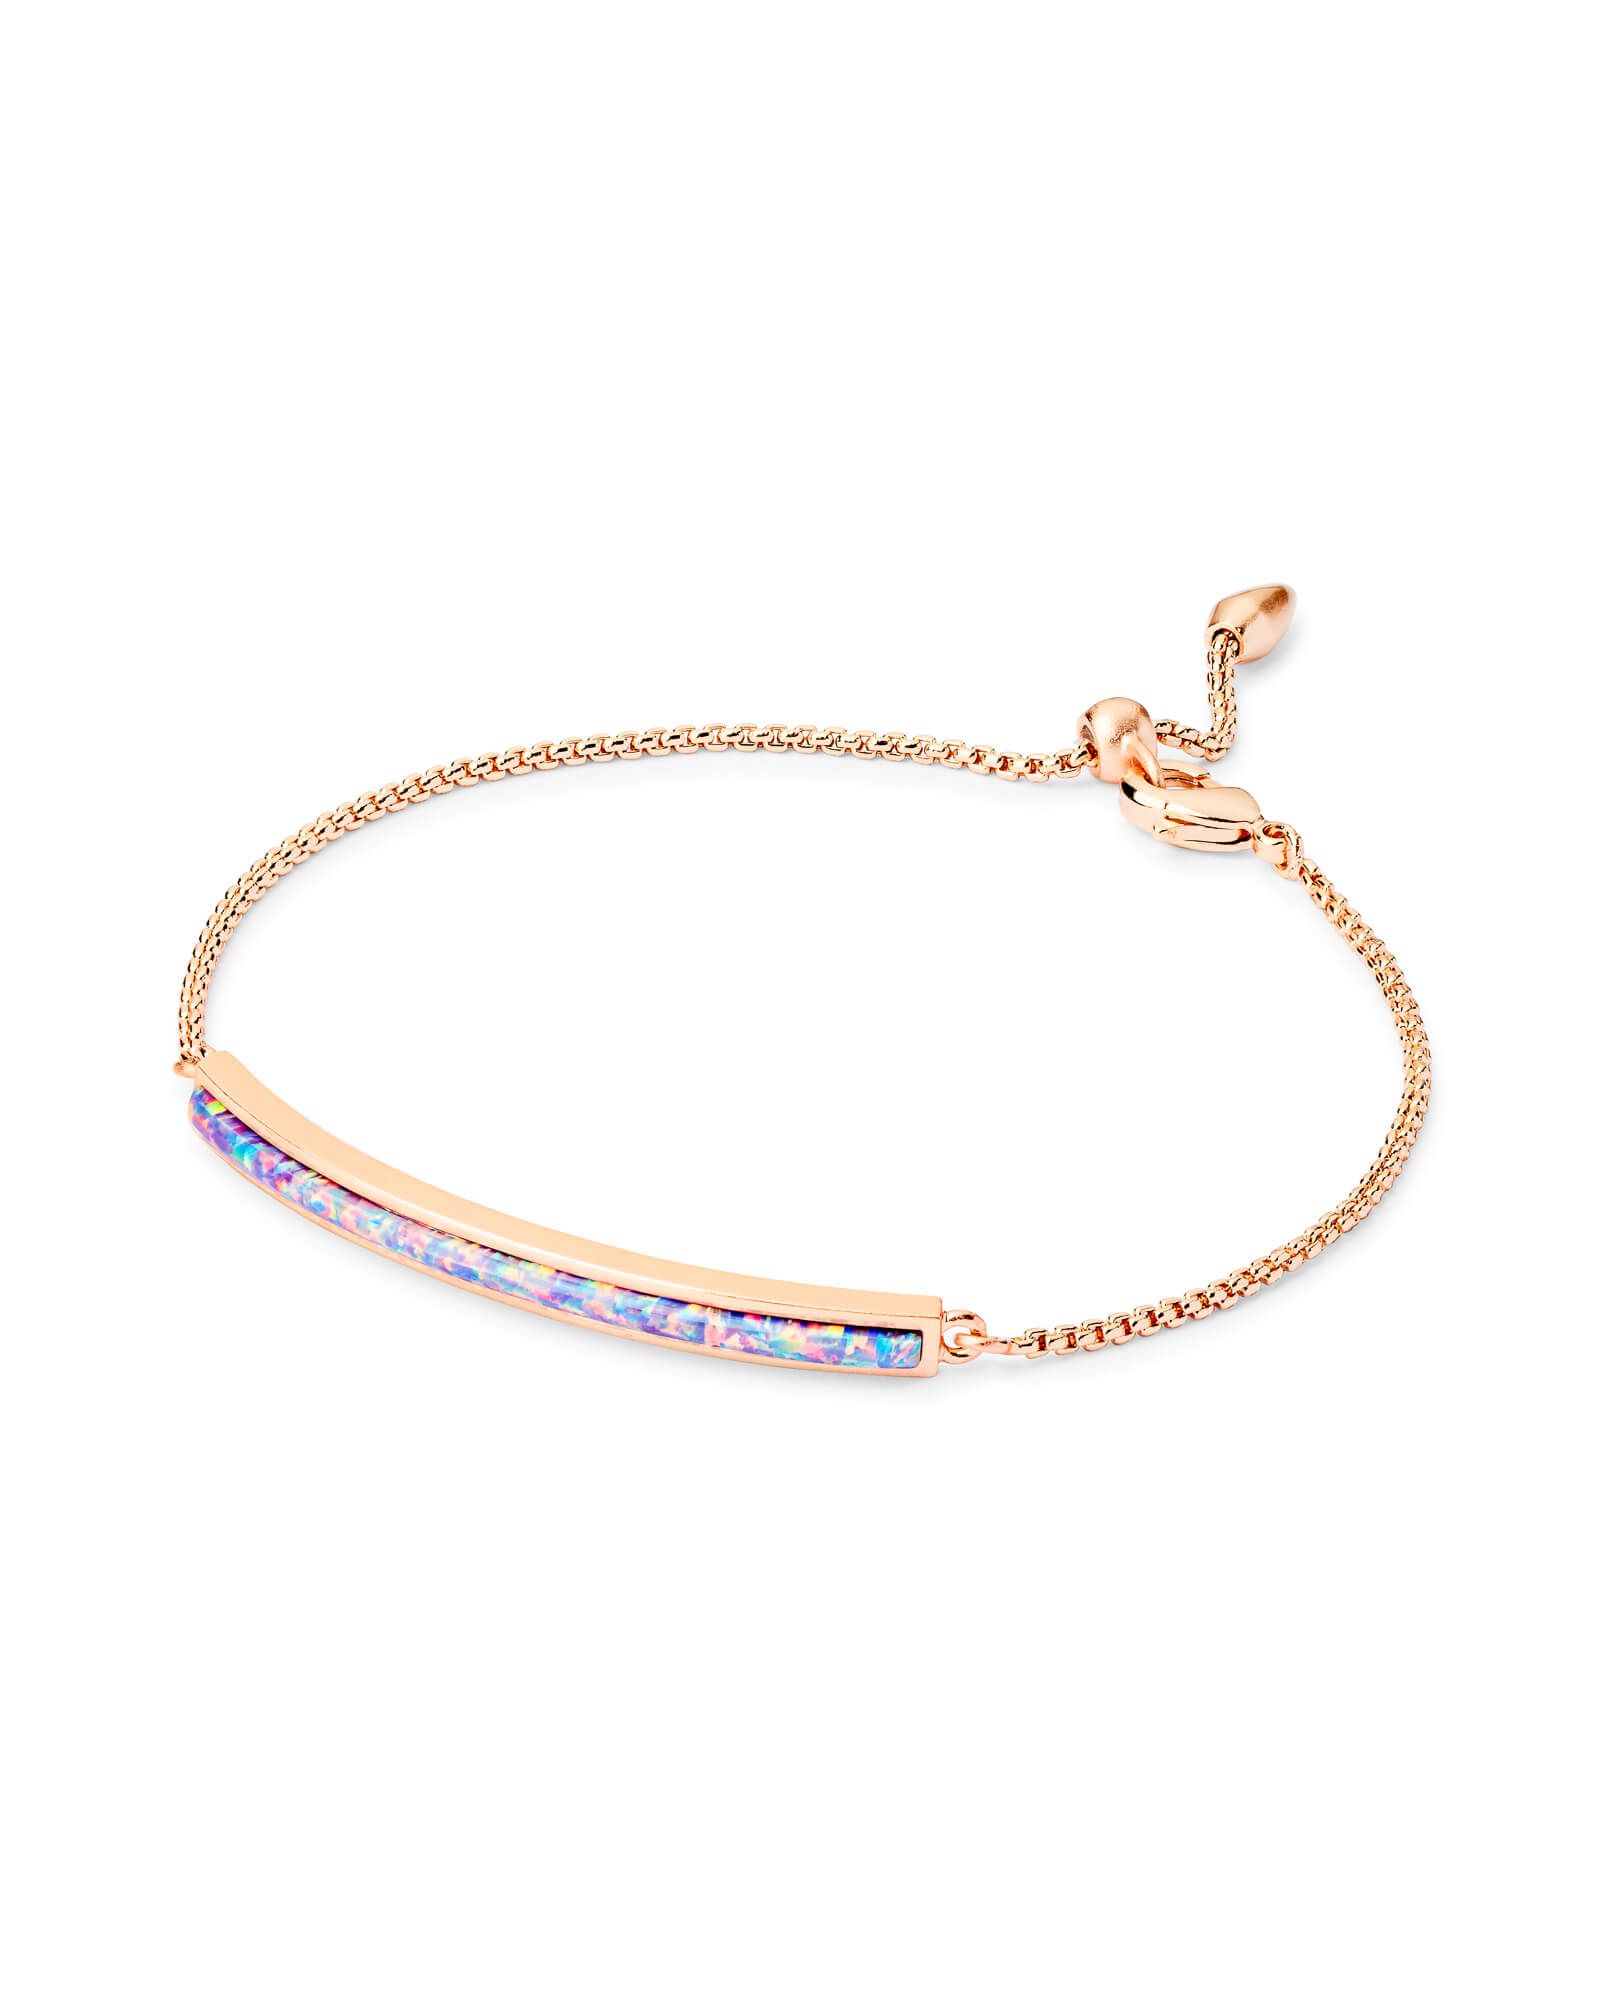 Eloise Ann Rose Gold Chain Bracelet in Lavender Kyocera Opal | Kendra Scott